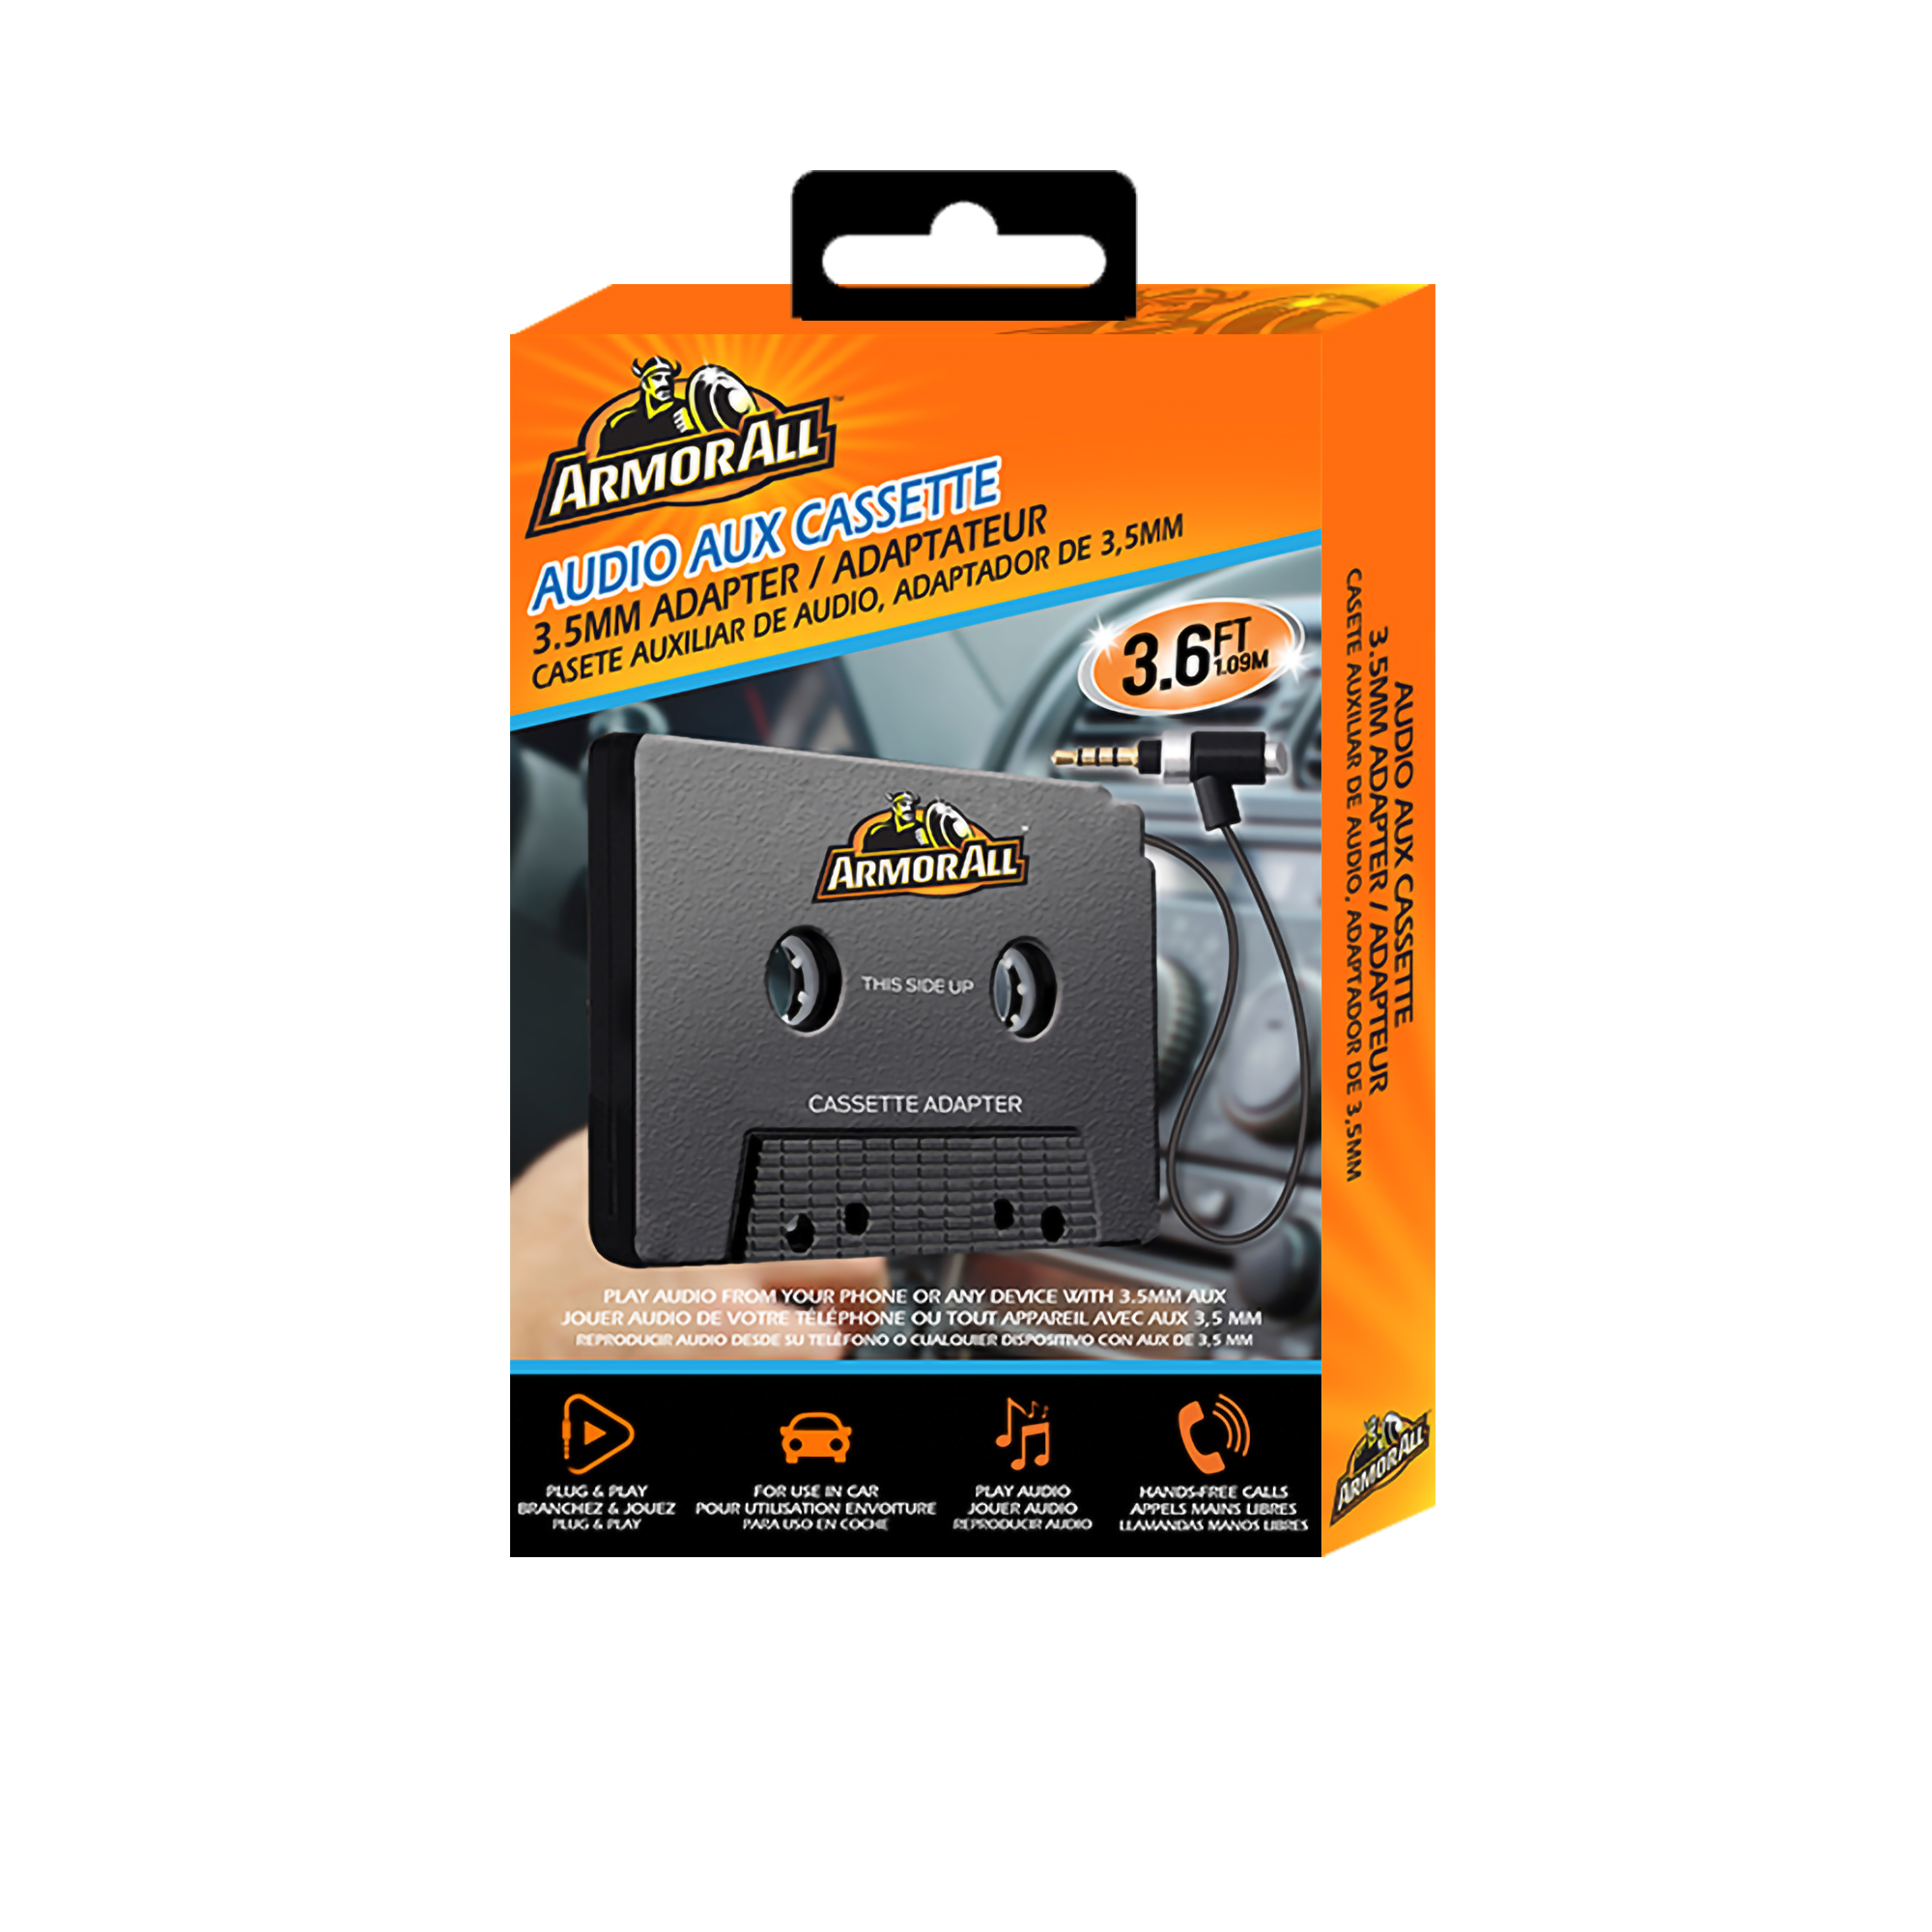 3.5mm Audio Cassette Adapter - Armor All